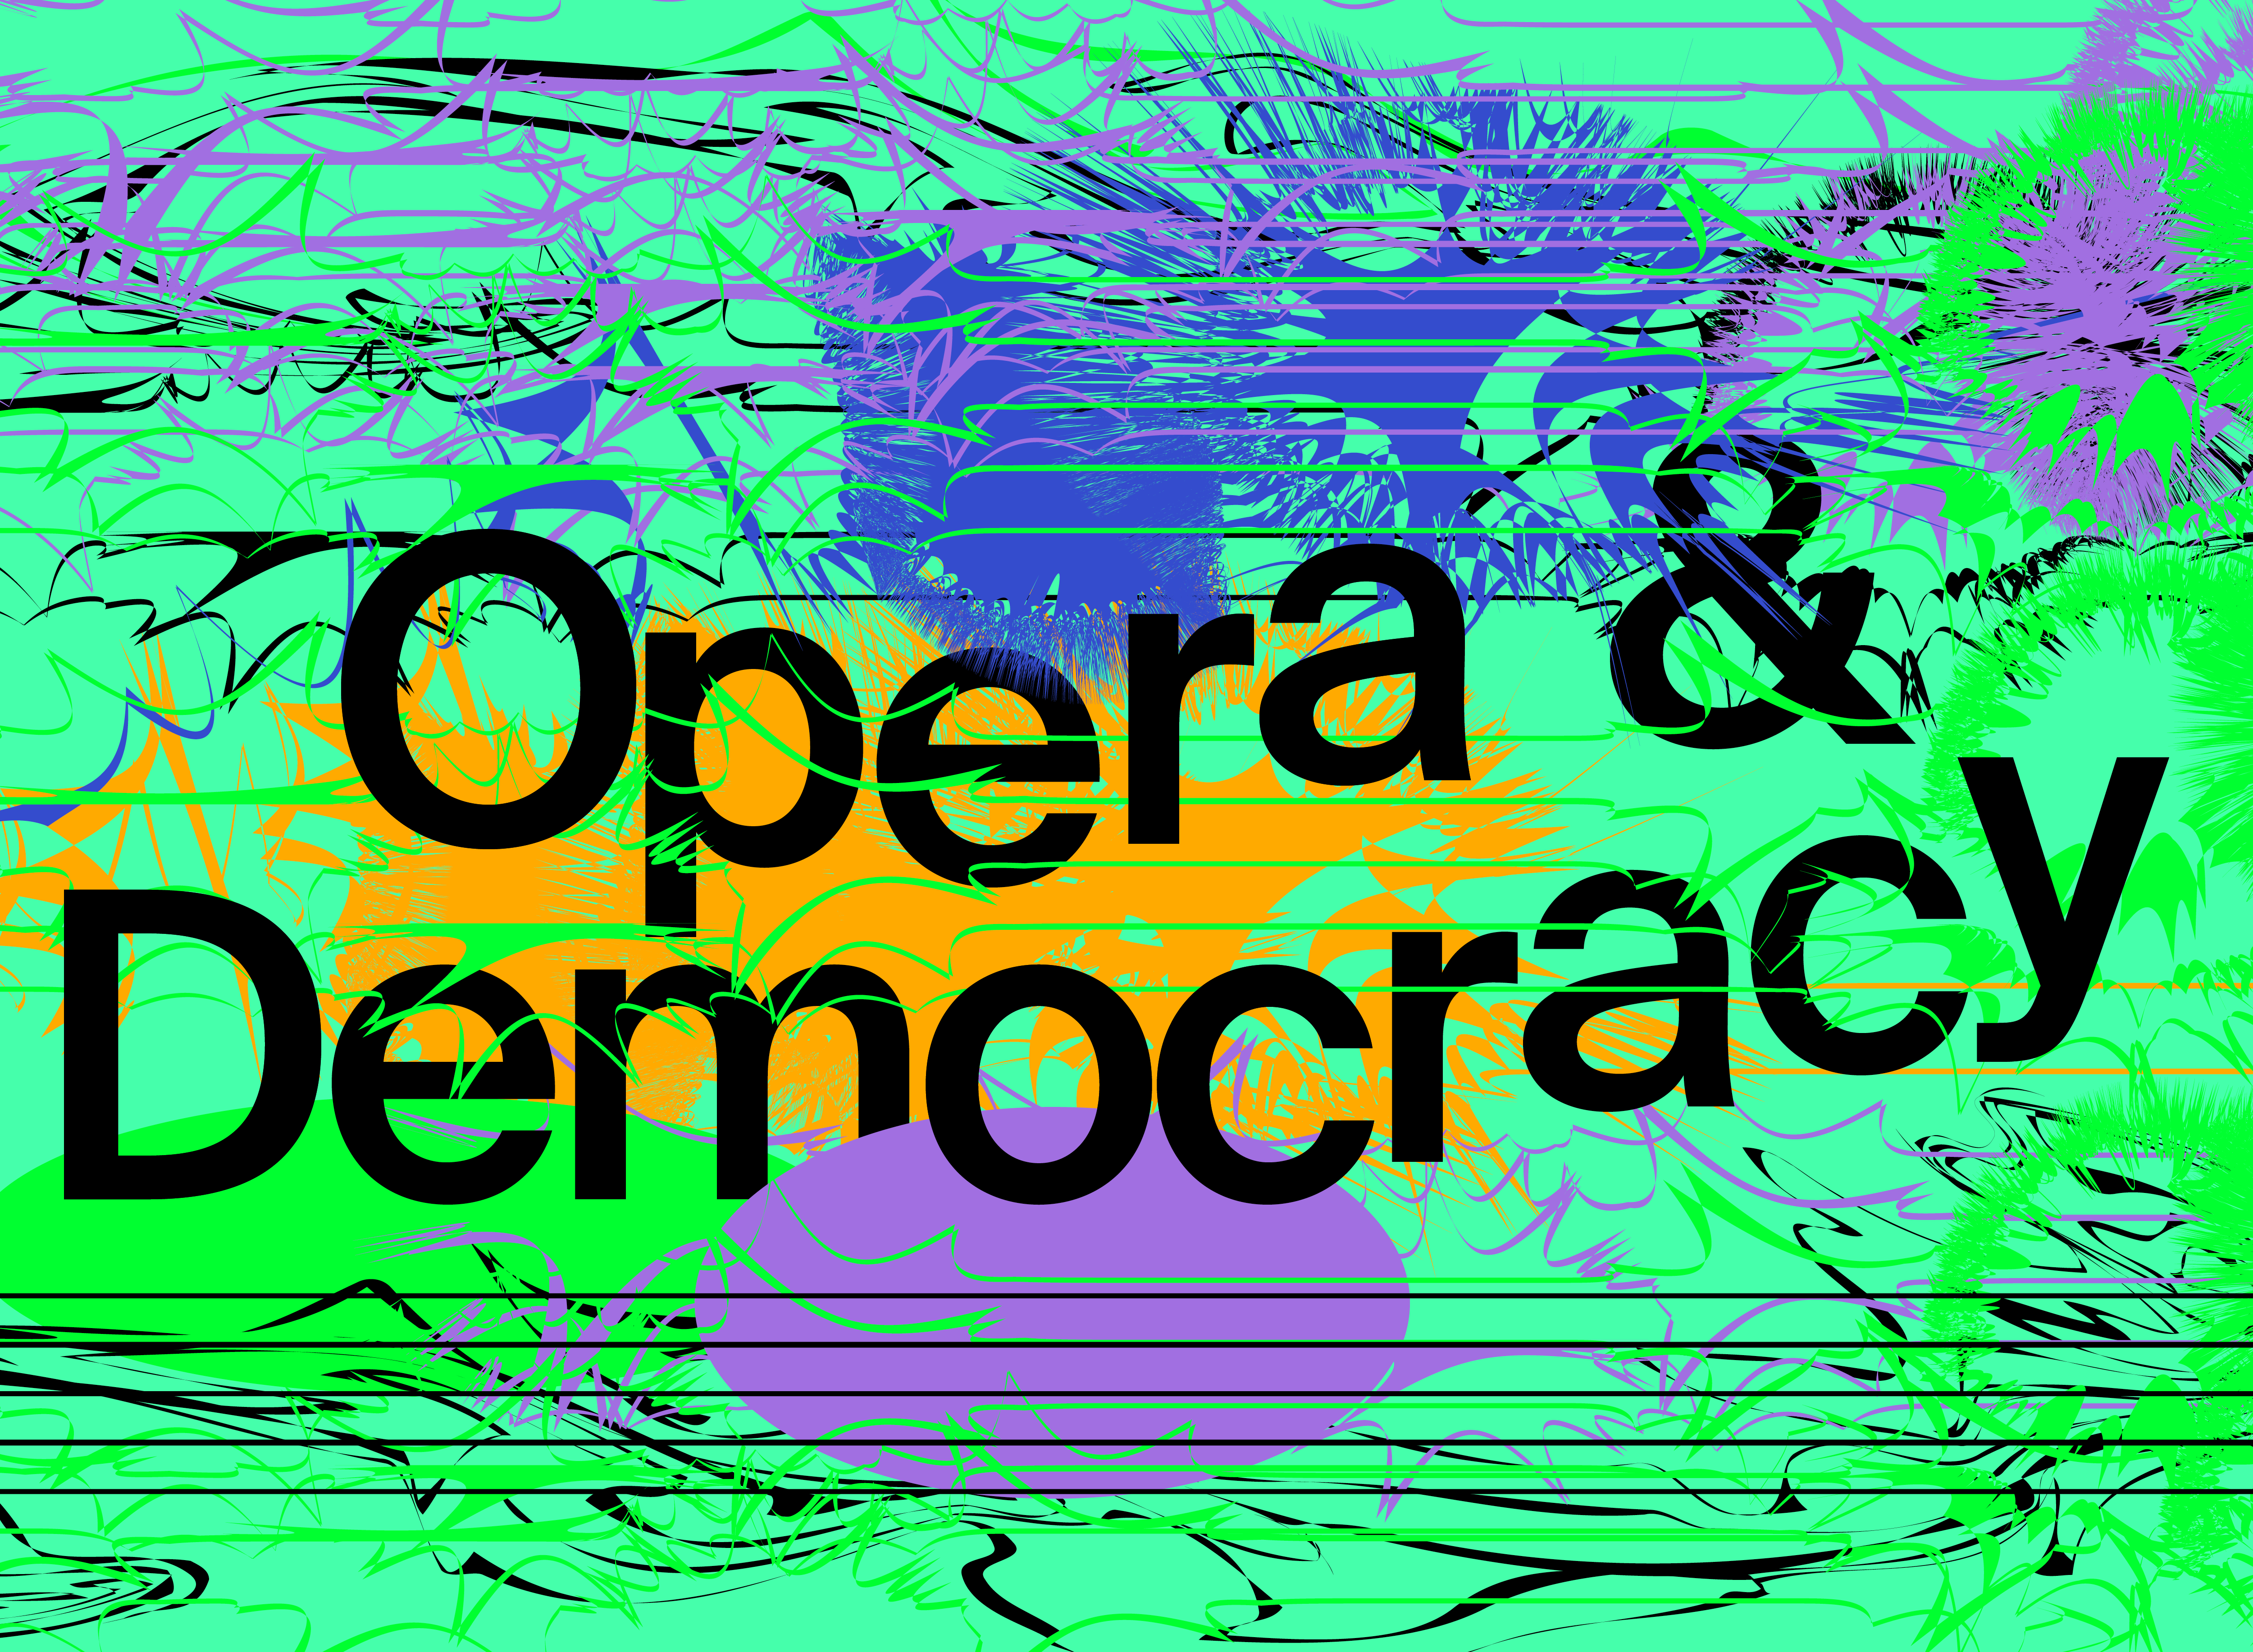 Opera&Democracy